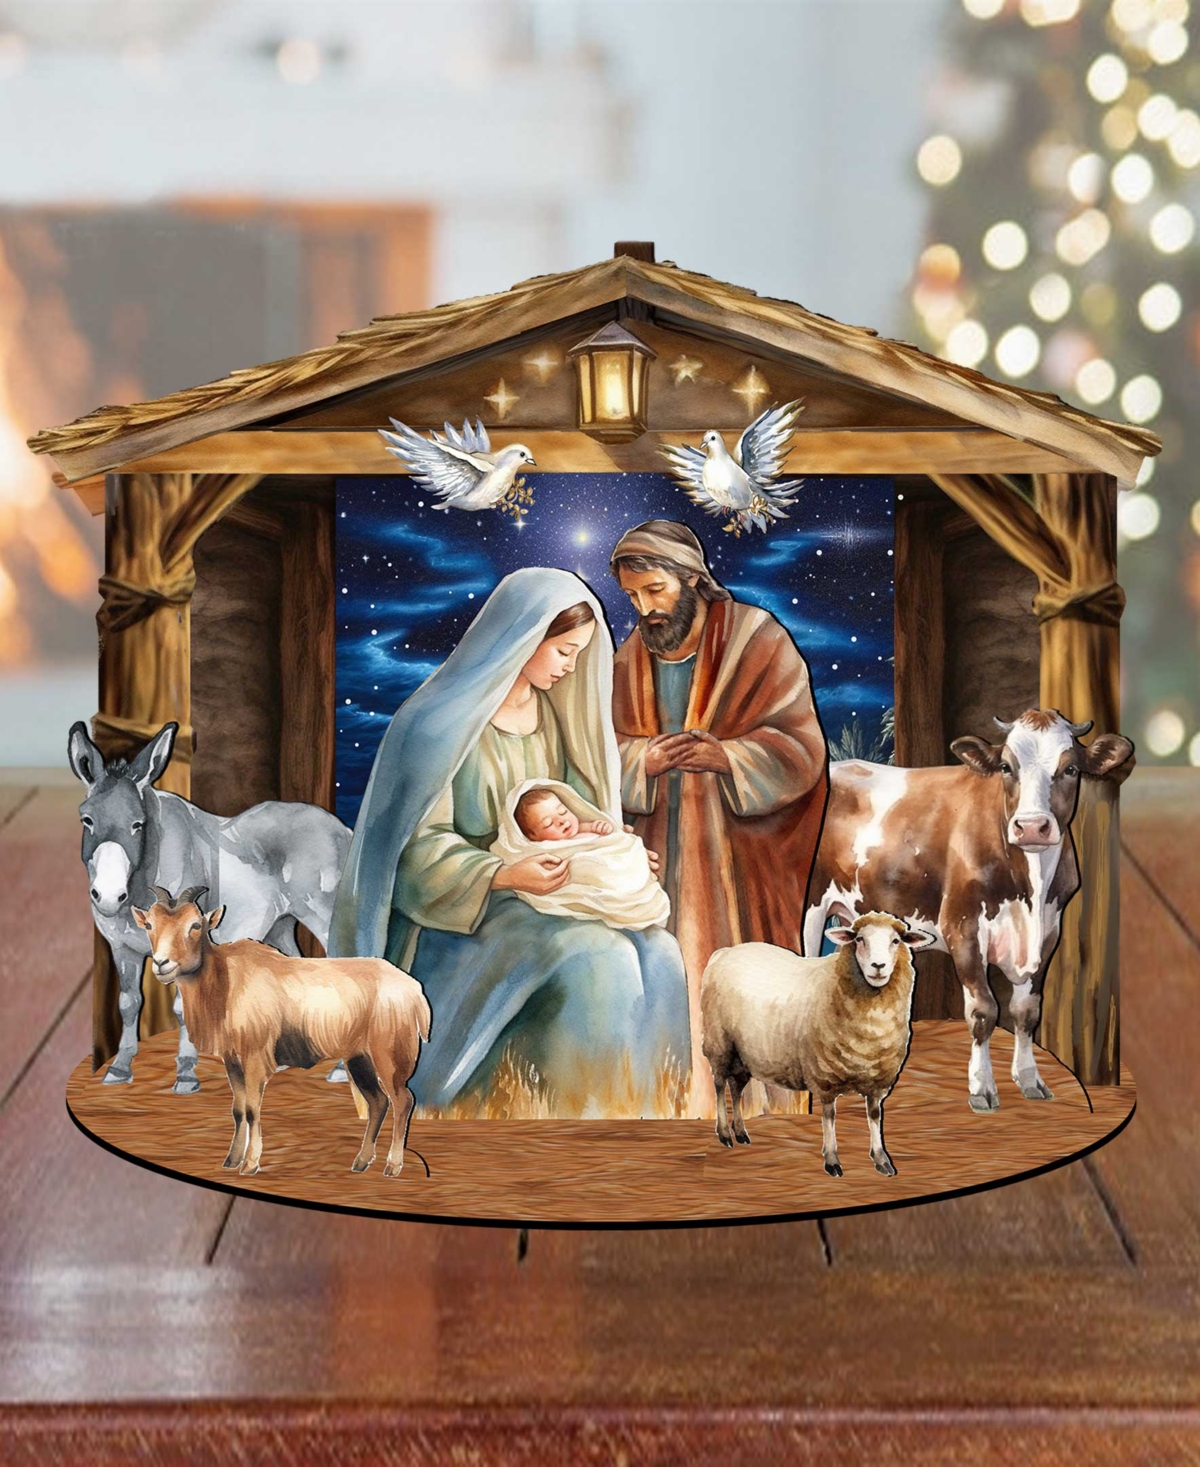 Designocracy Classic Holy Family Nativity Scene 7" Christmas Nativity Table Decoration By G.debrekht In Multi Color